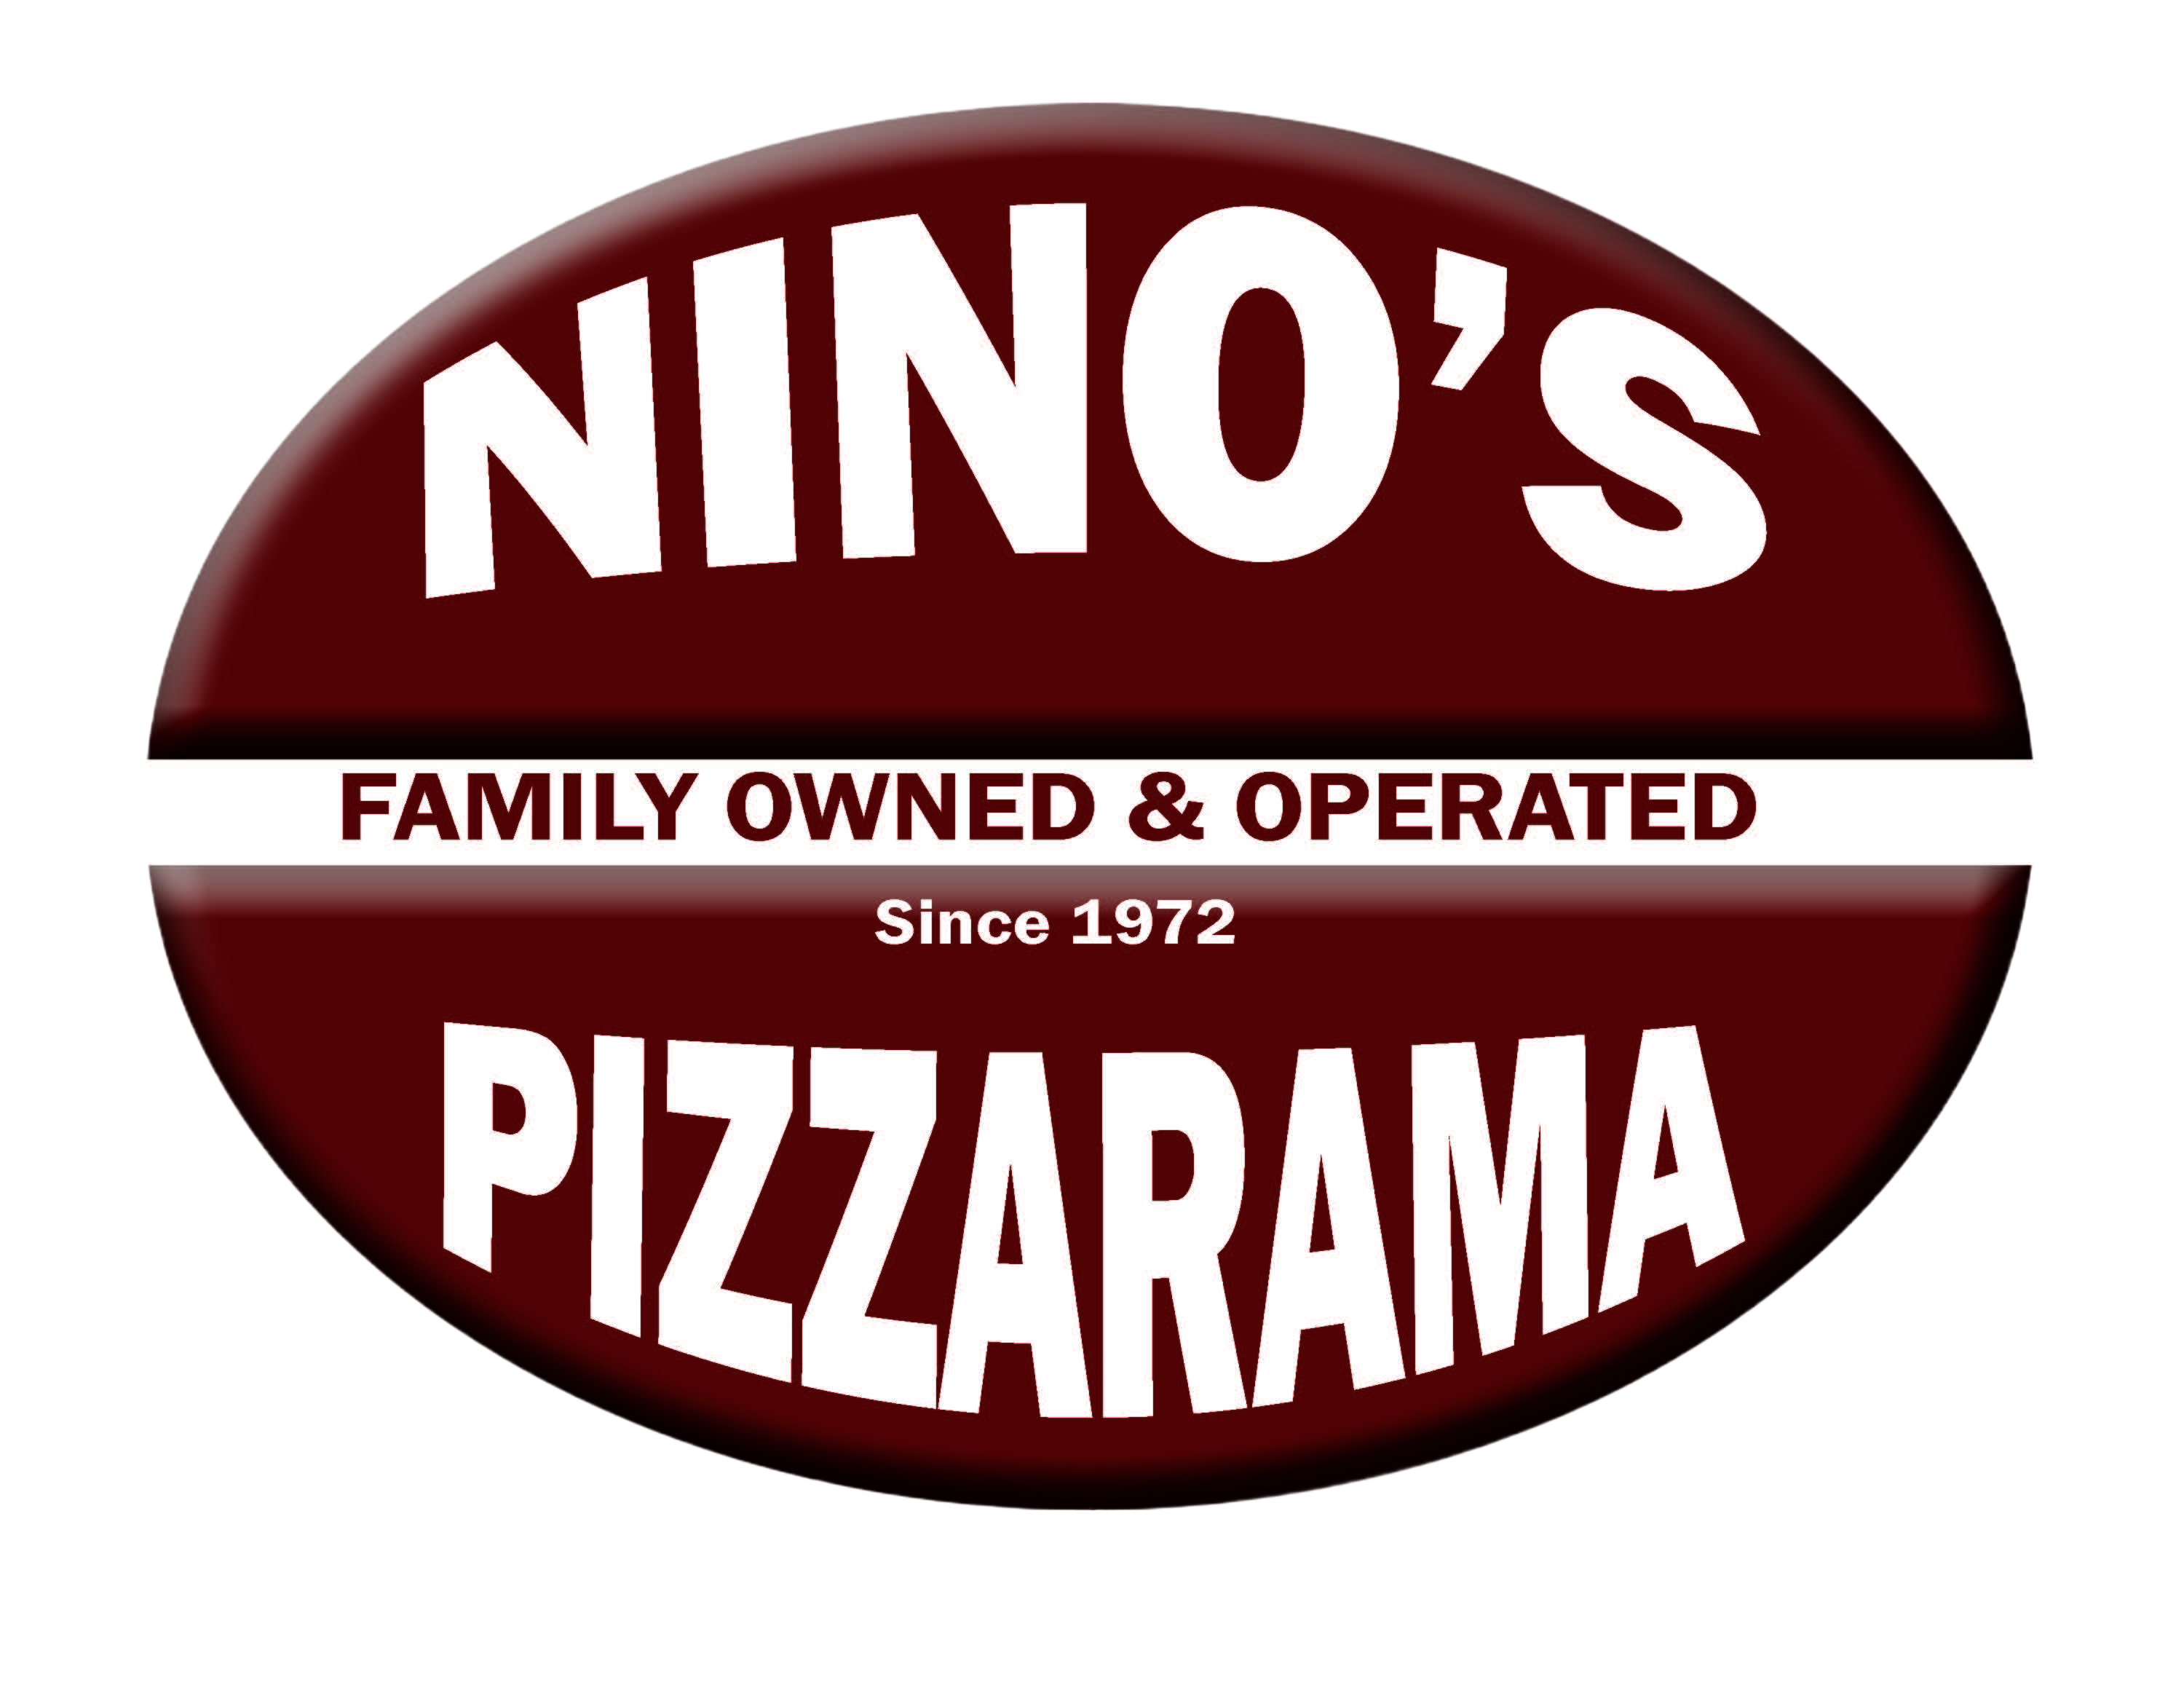 Nino's family owned & operated pizzarama.